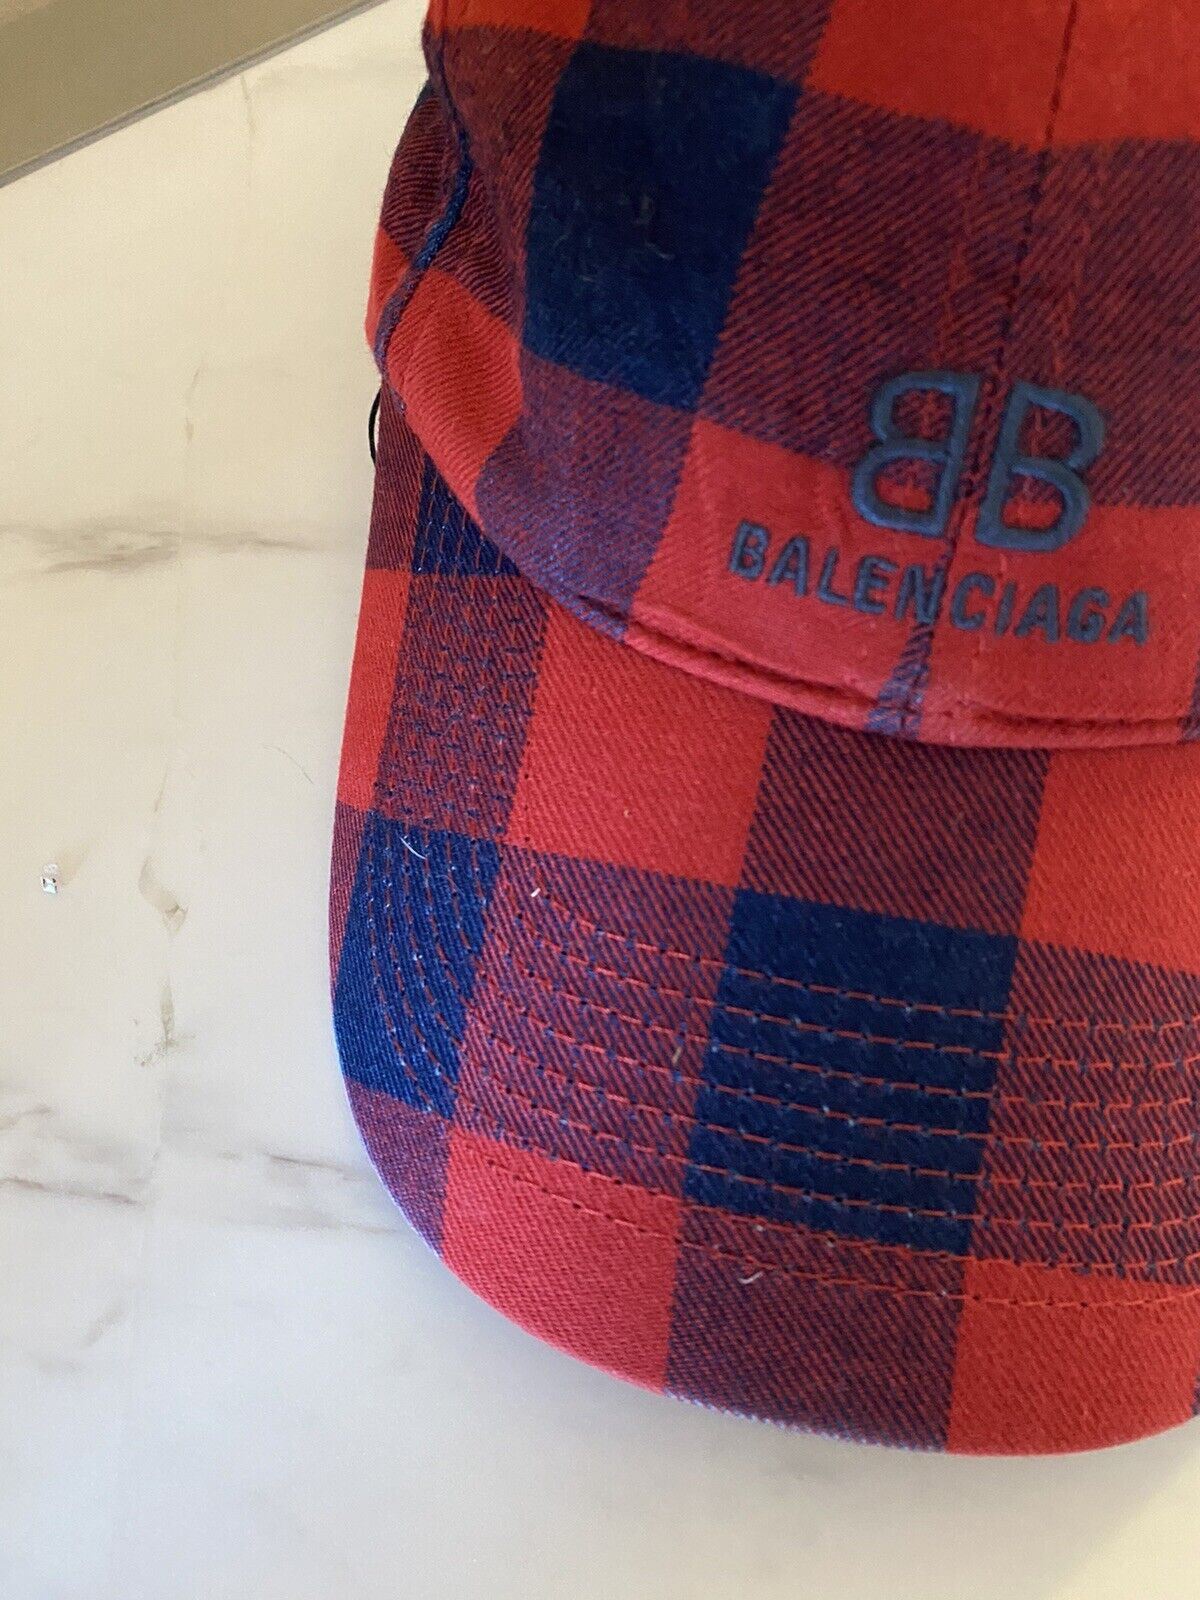 Neu mit Etikett: Balenciaga Flanell-Baseballmütze, Rot/Blau, Größe L, Italien